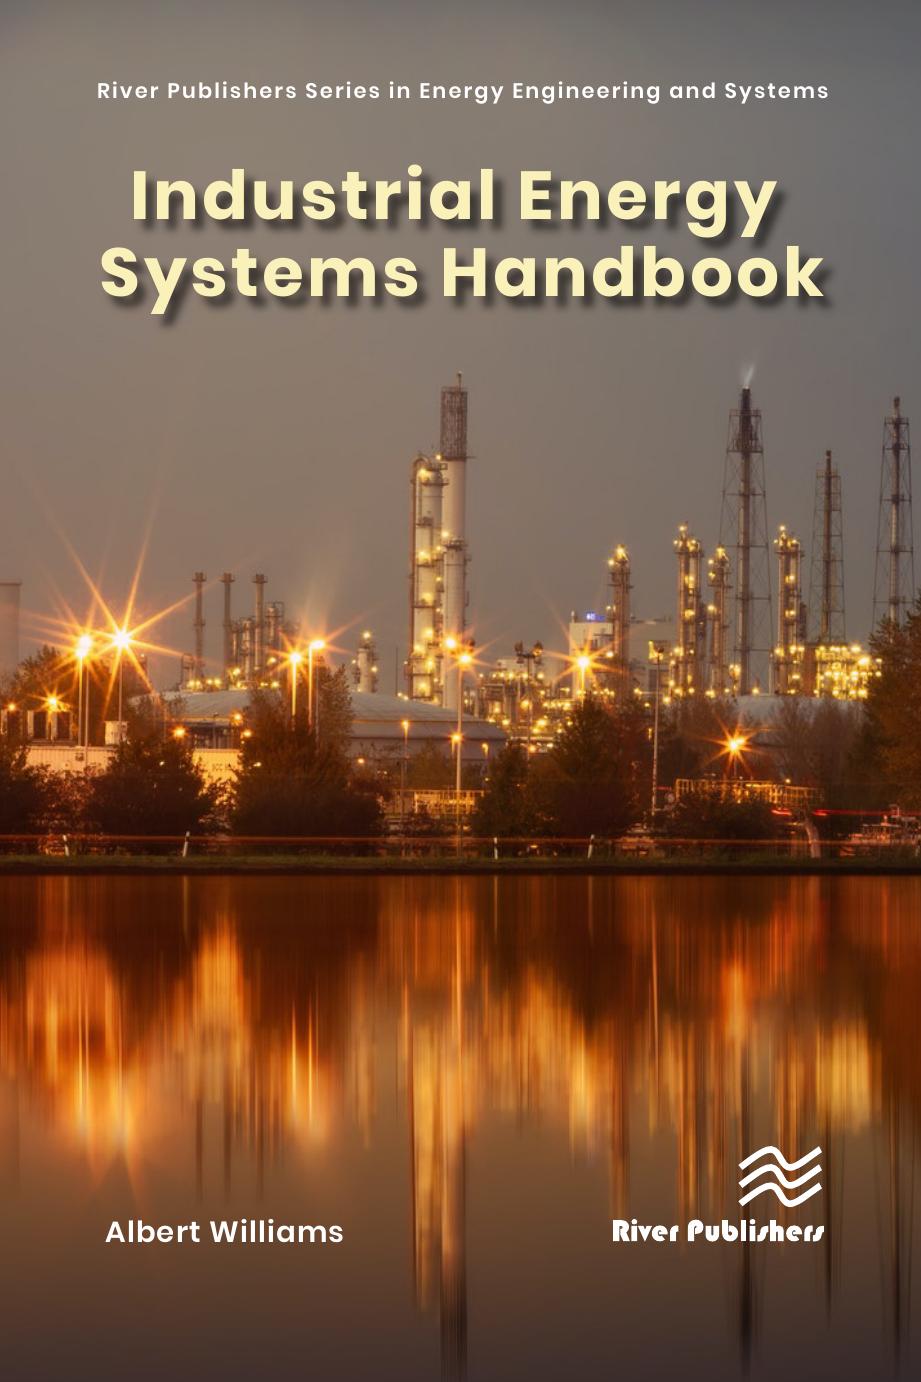 Industrial Energy Systems Handbook by Albert Williams